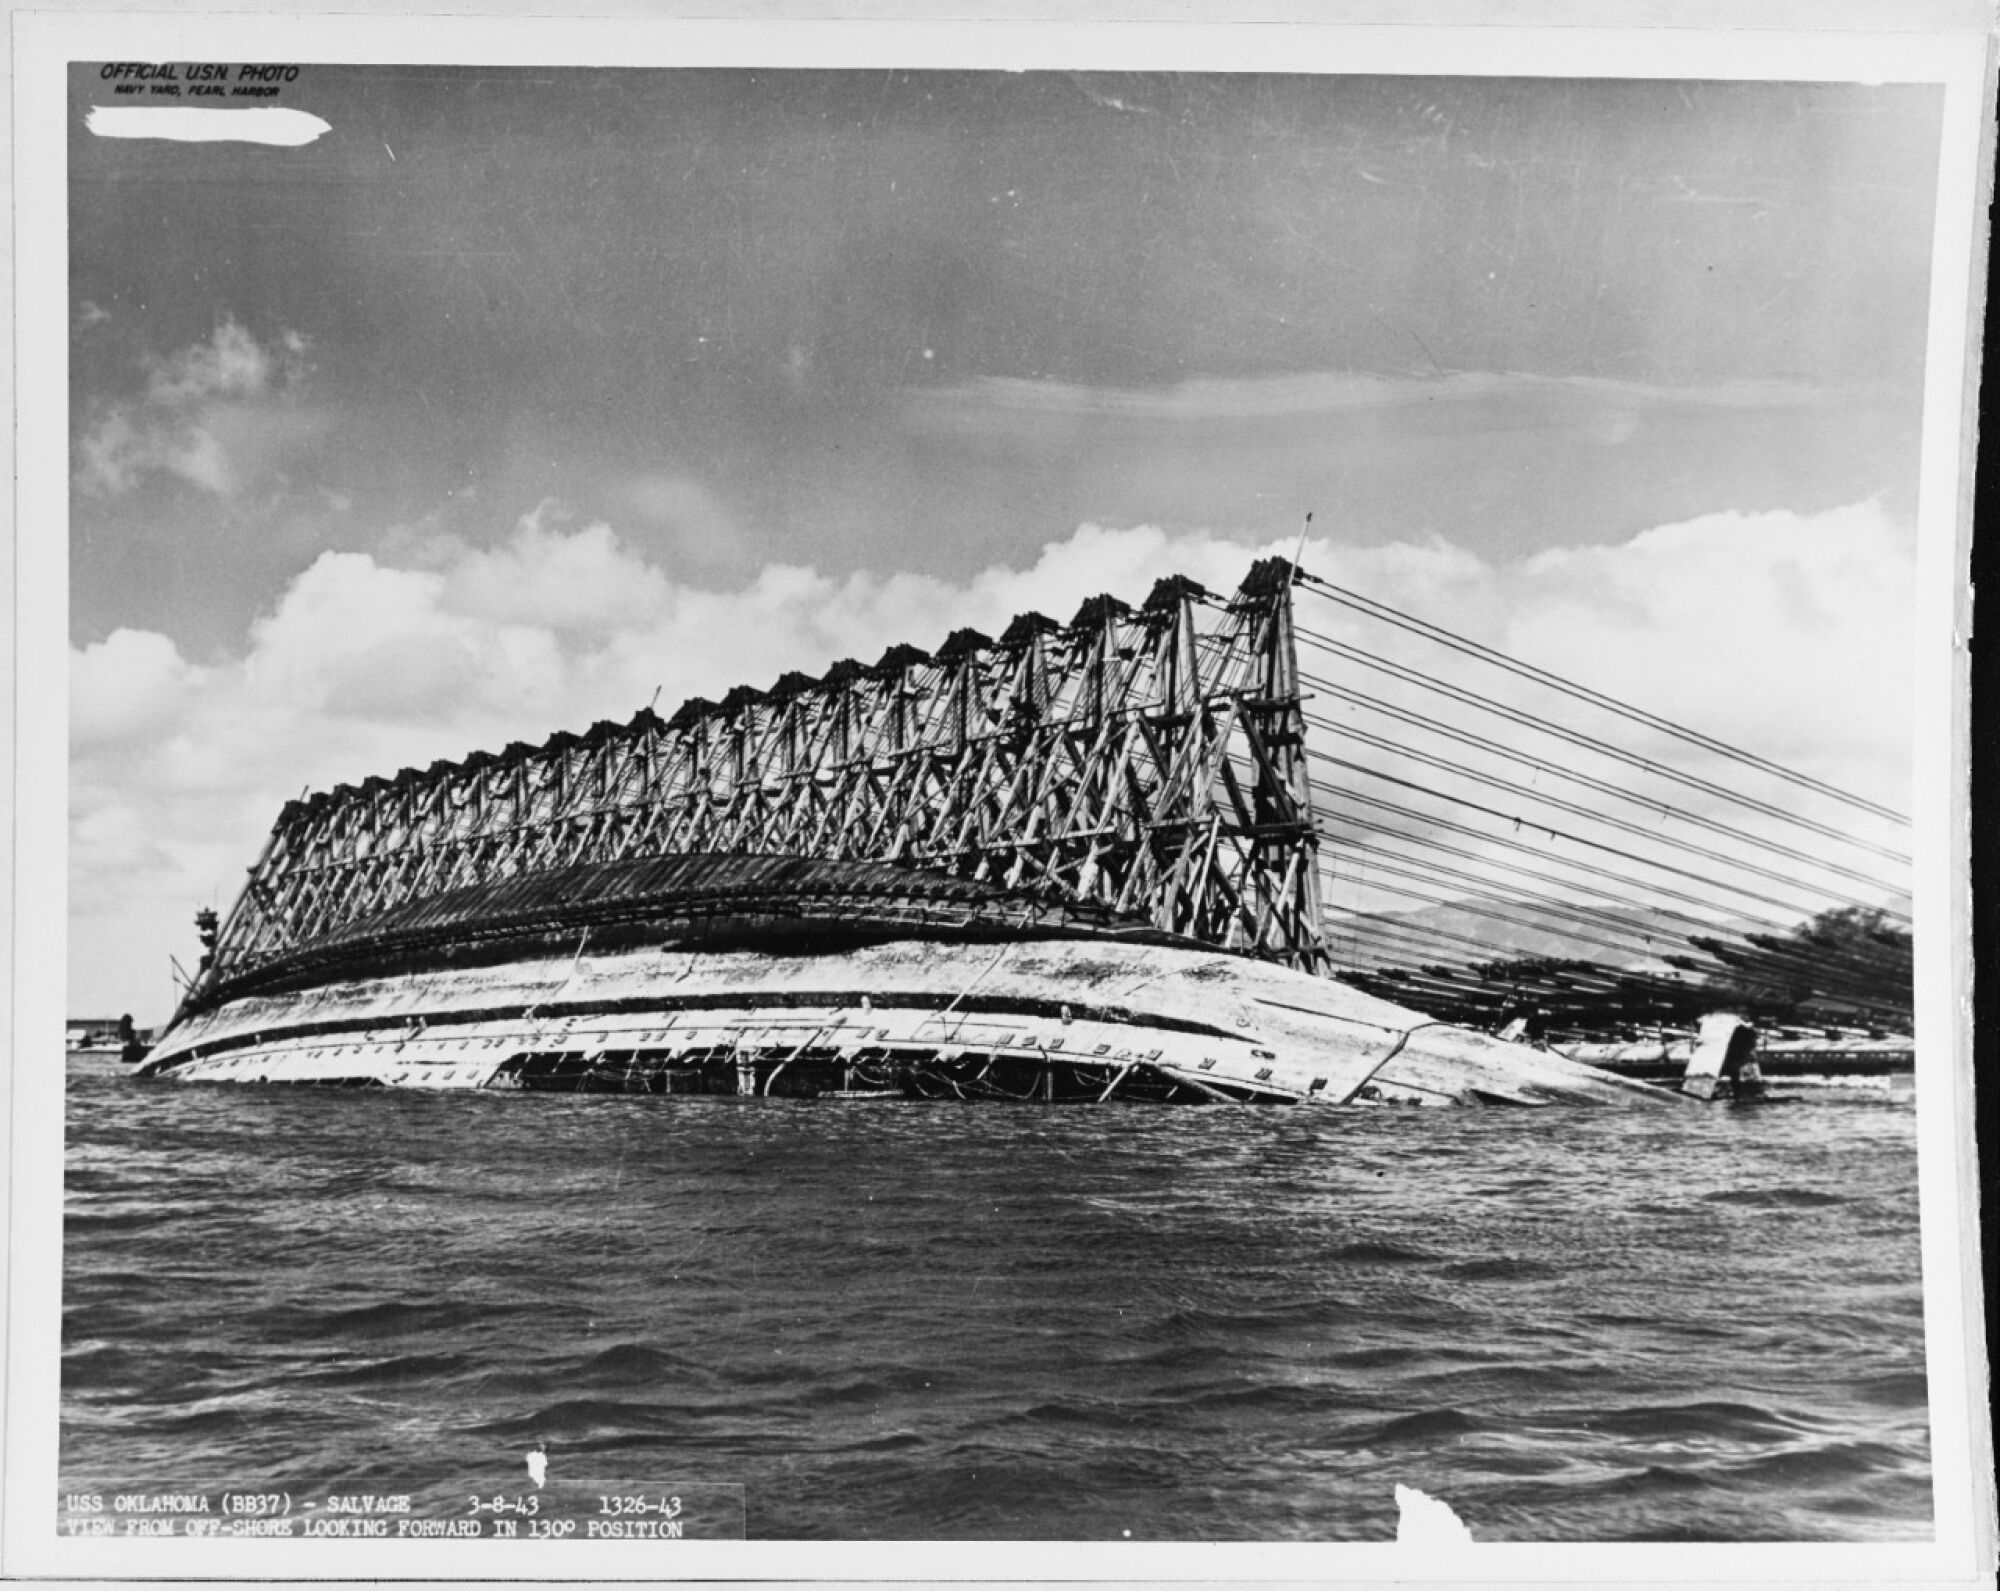 The capsized battleship Oklahoma.